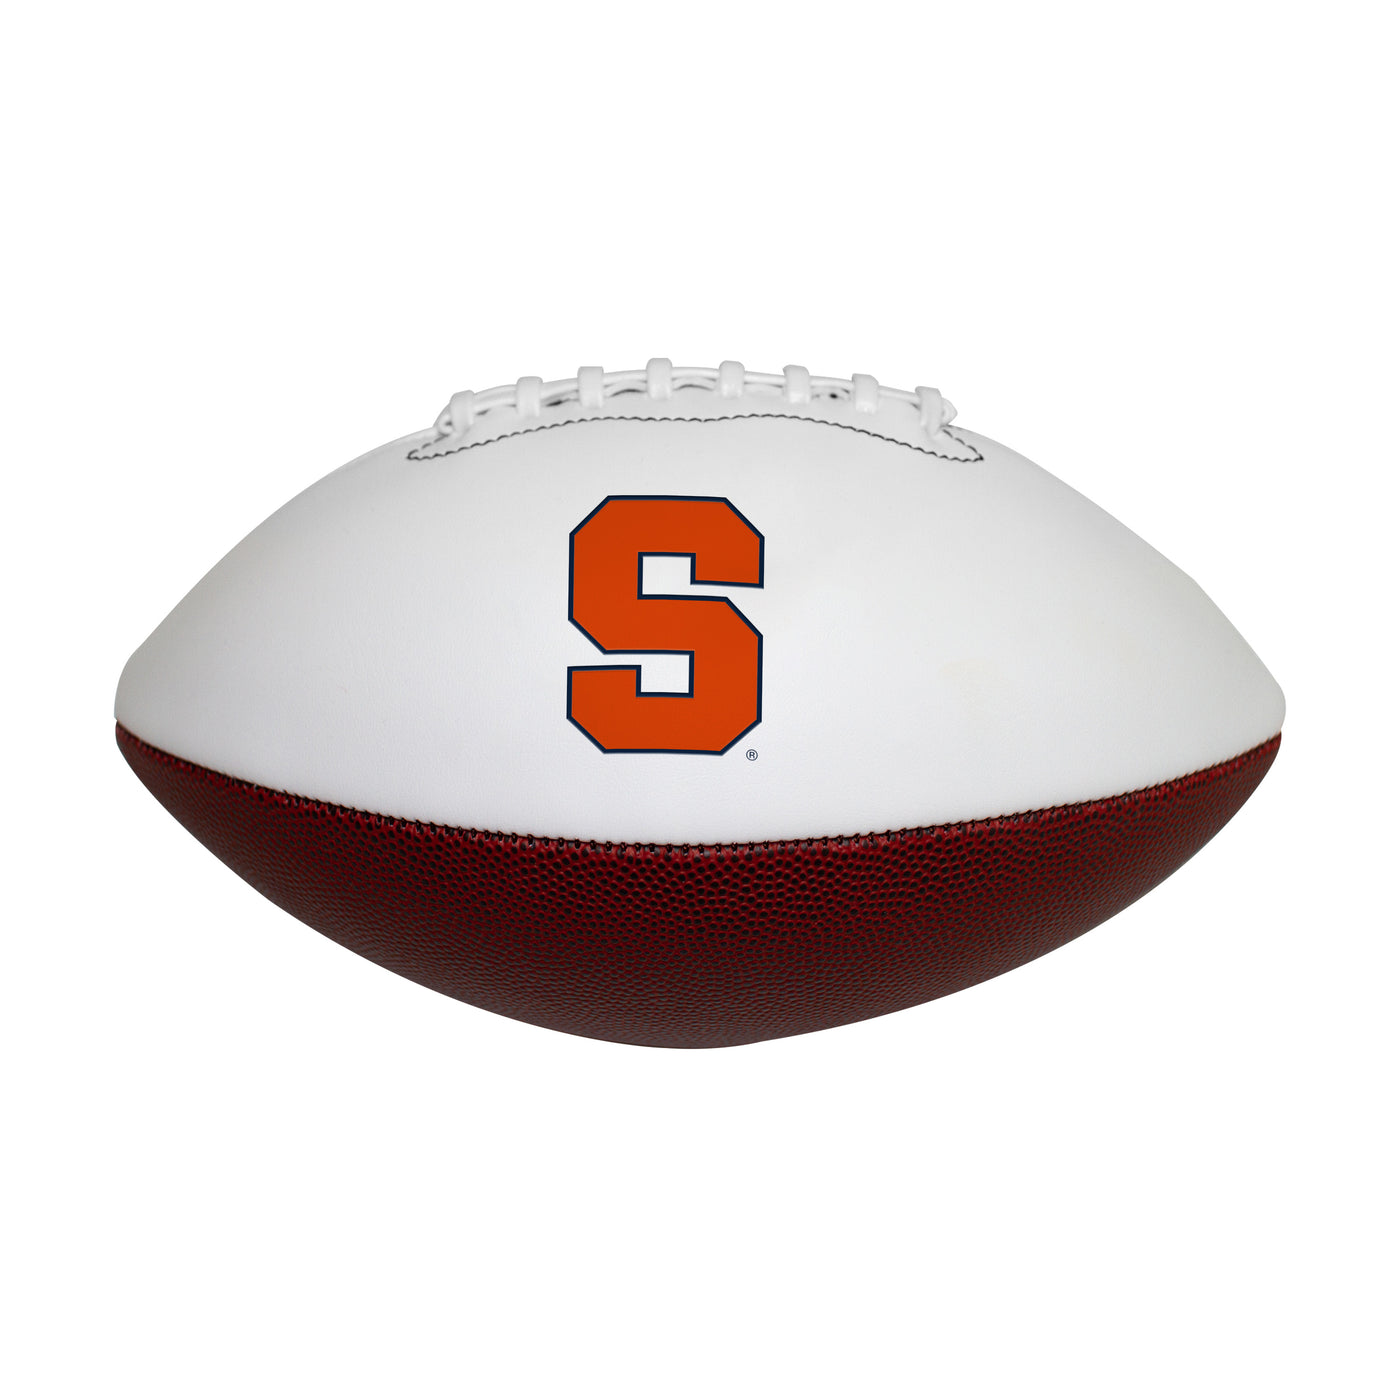 Syracuse Official-Size Autograph Football